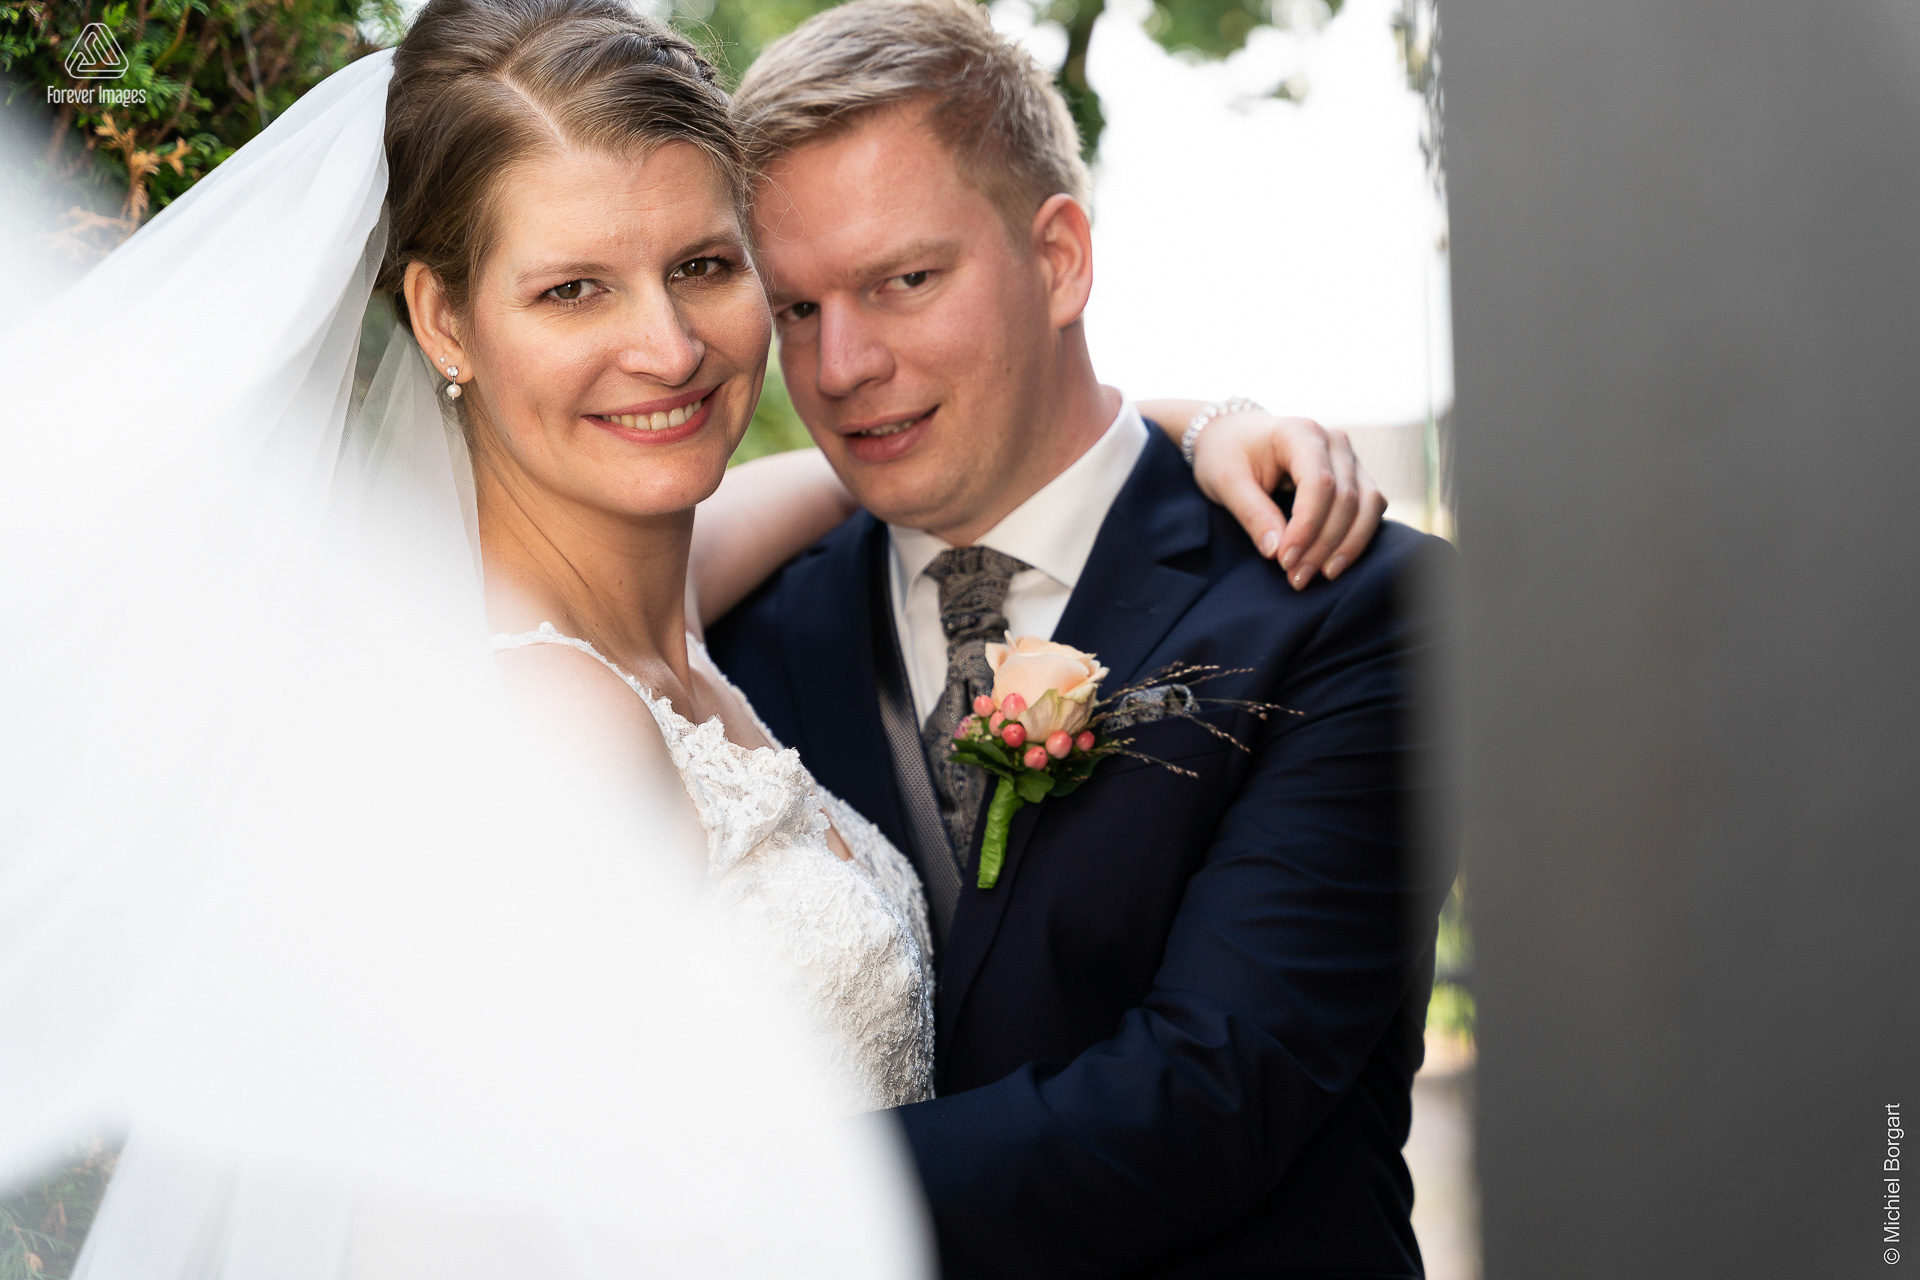 Bridal photo beyond the veil | Aaron Emmy Kloosterhoeve | Wedding Photographer Michiel Borgart - Forever Images.